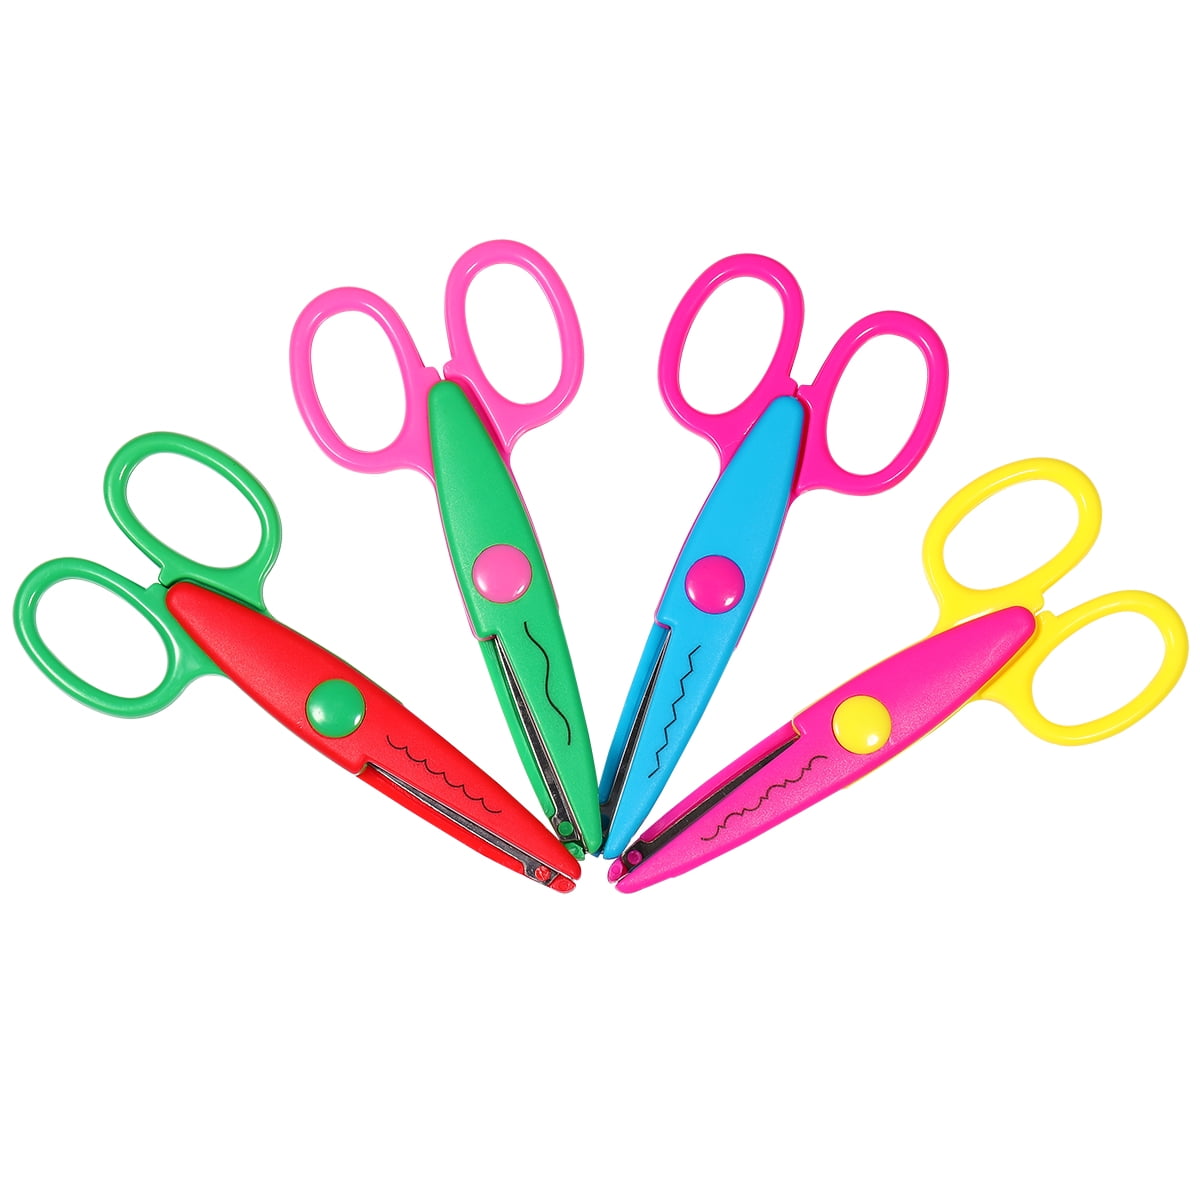 6 inch Left/Right Handed Kids Scissors, Safety Blunt Tip Toddler Scissors Stainl